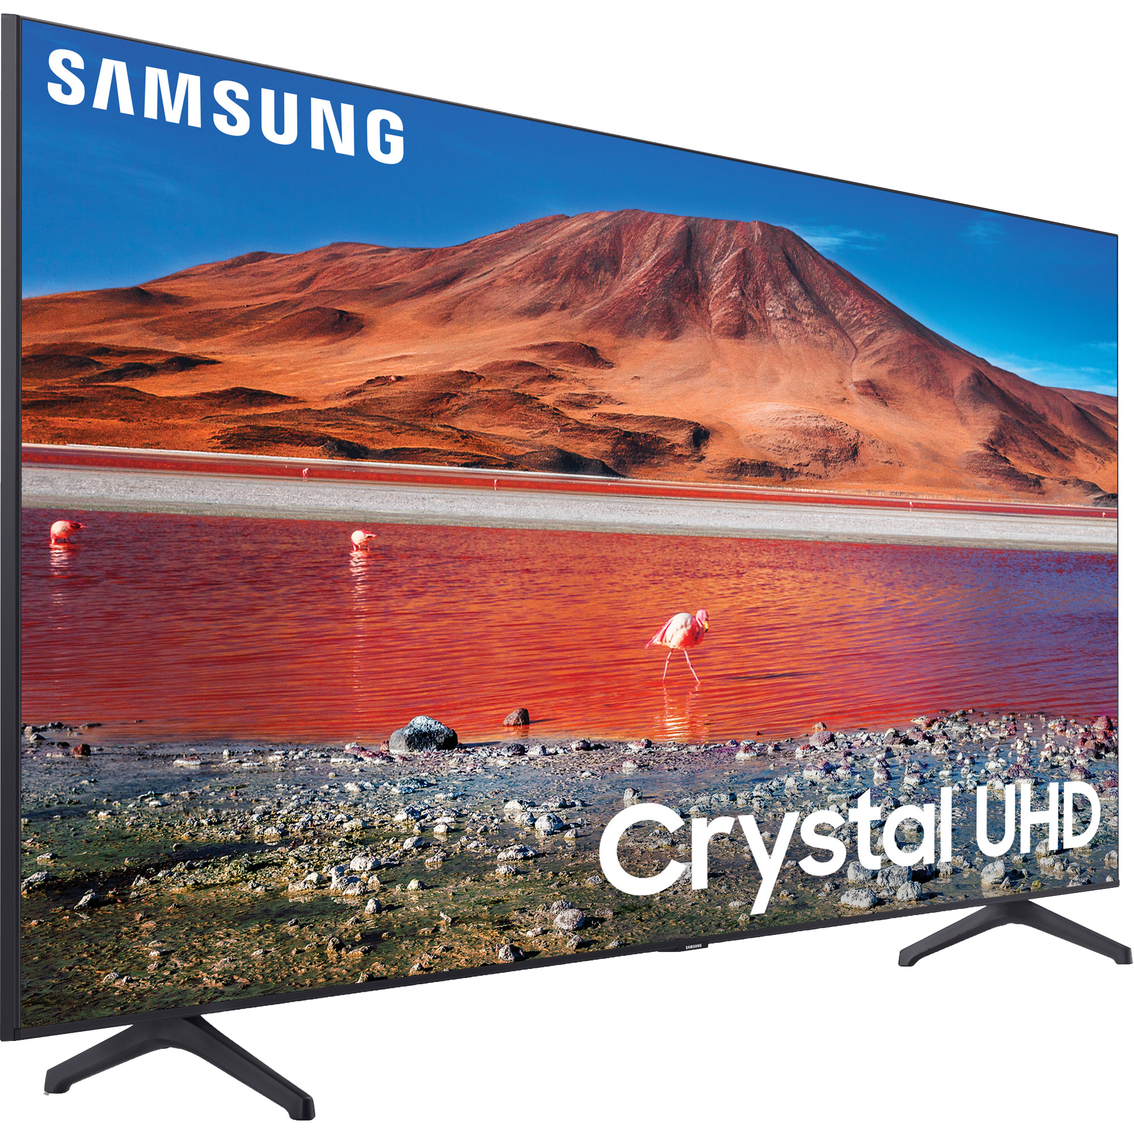 Samsung 43 in. Class TU7000 Crystal UHD 4K HDR Smart TV UN43TU7000FXZA - Image 2 of 7